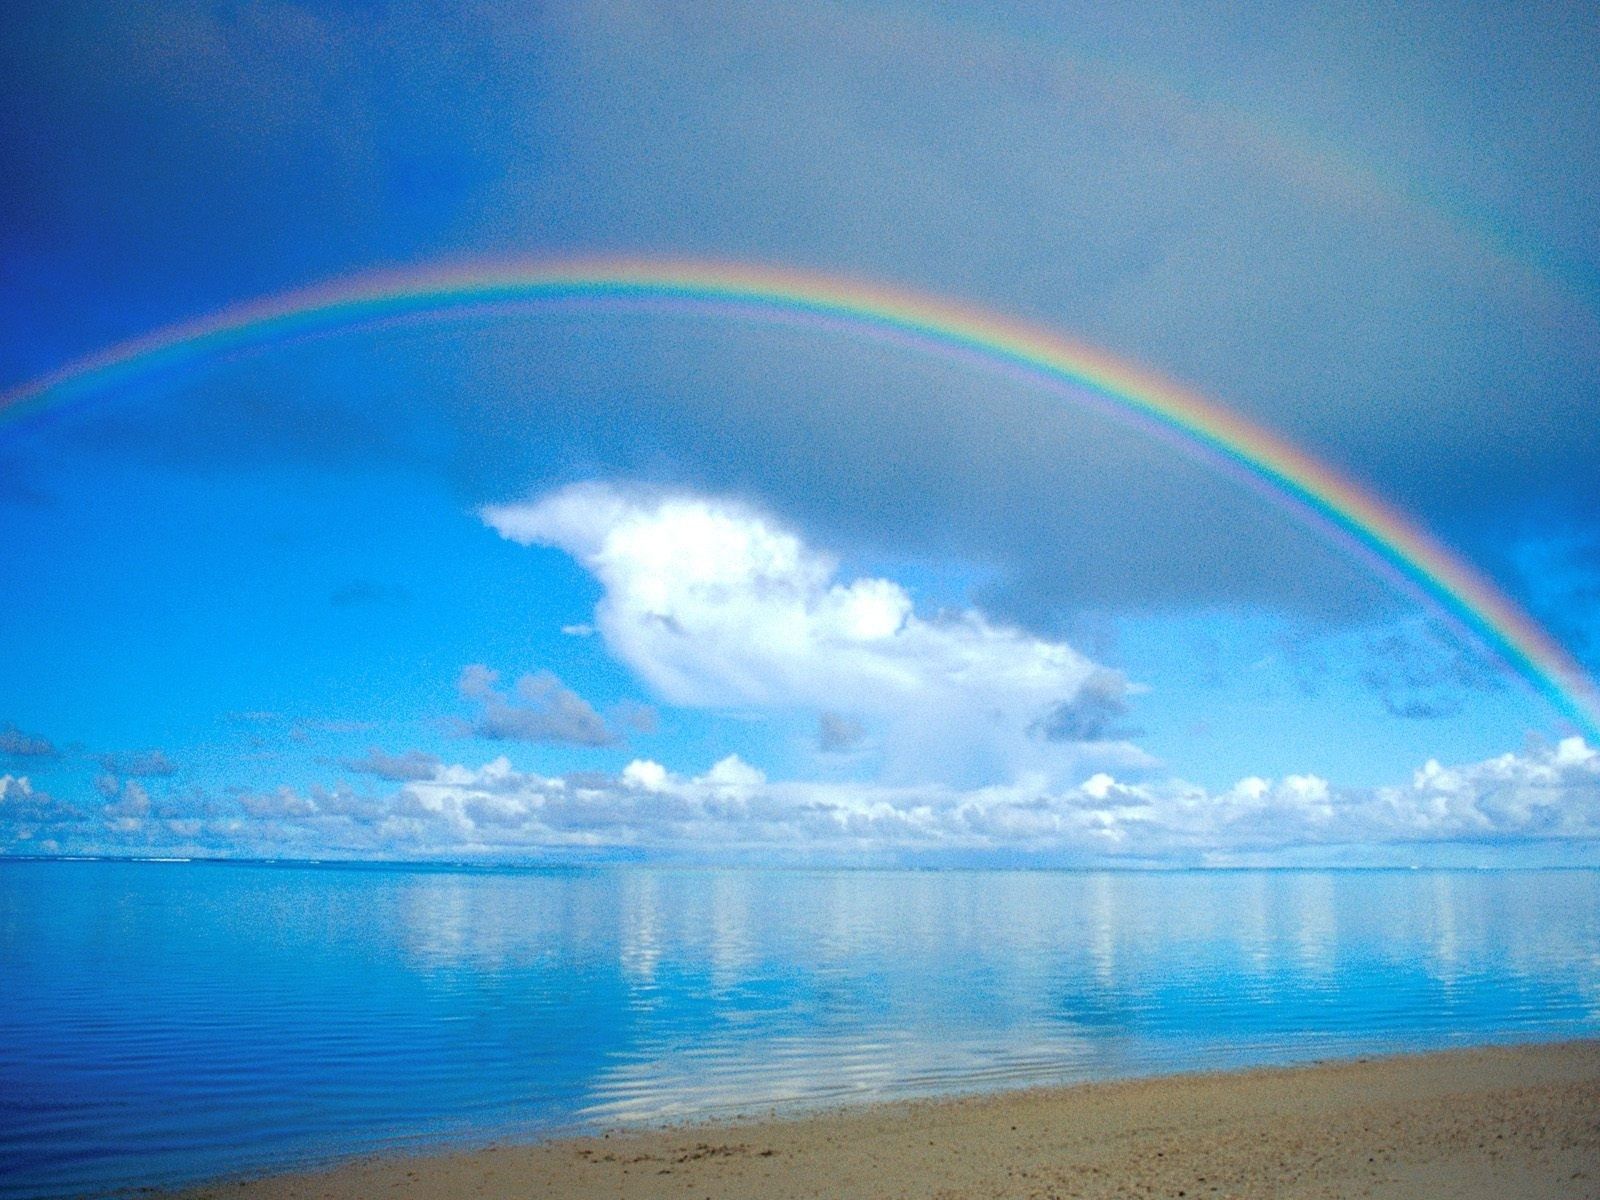 Beautiful rainbow over the blue ocean water